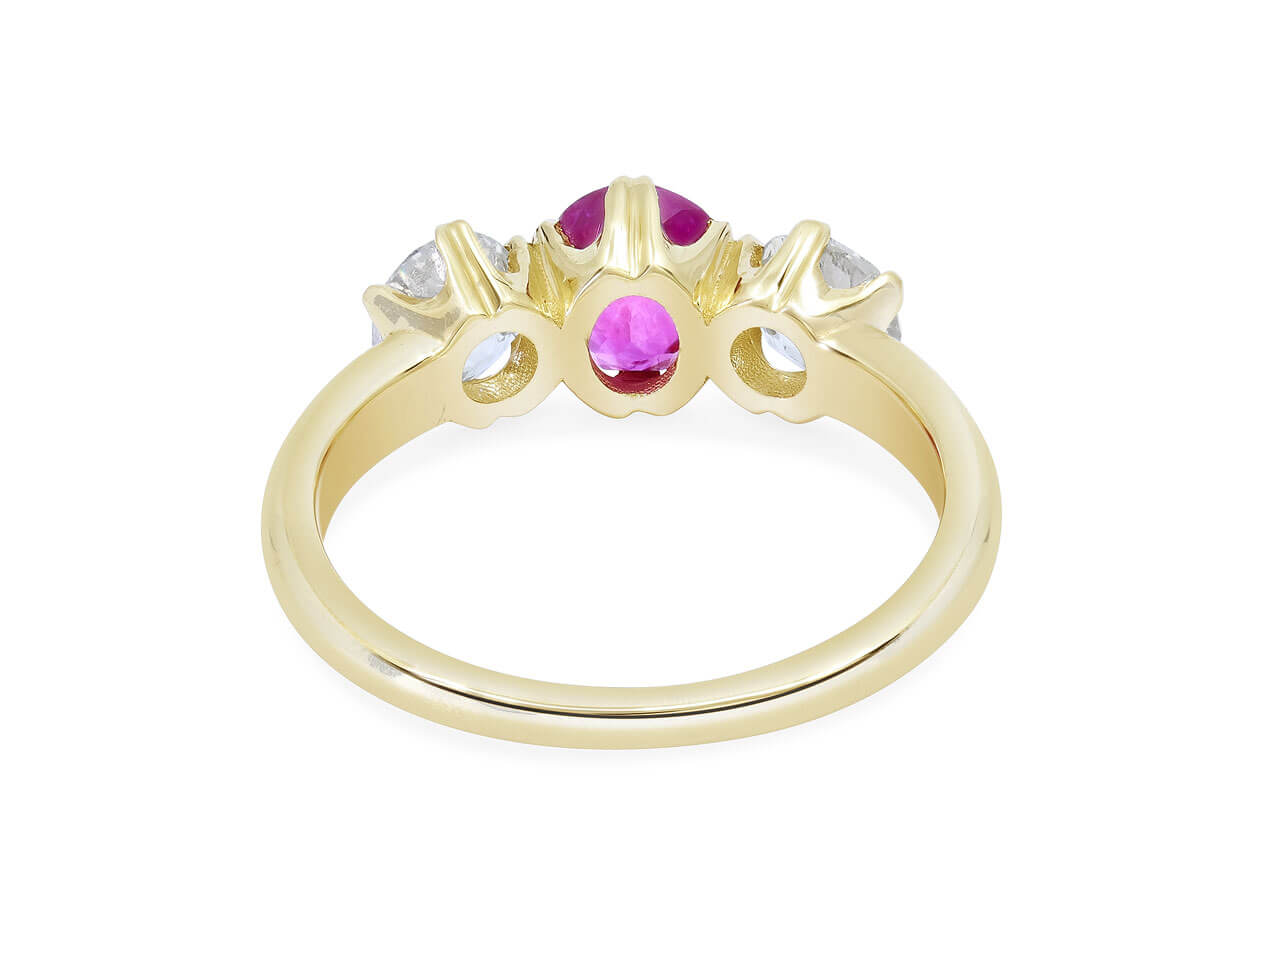 Beladora 'Bespoke' Three Stone Pink Sapphire and Diamond Ring in 14K Gold